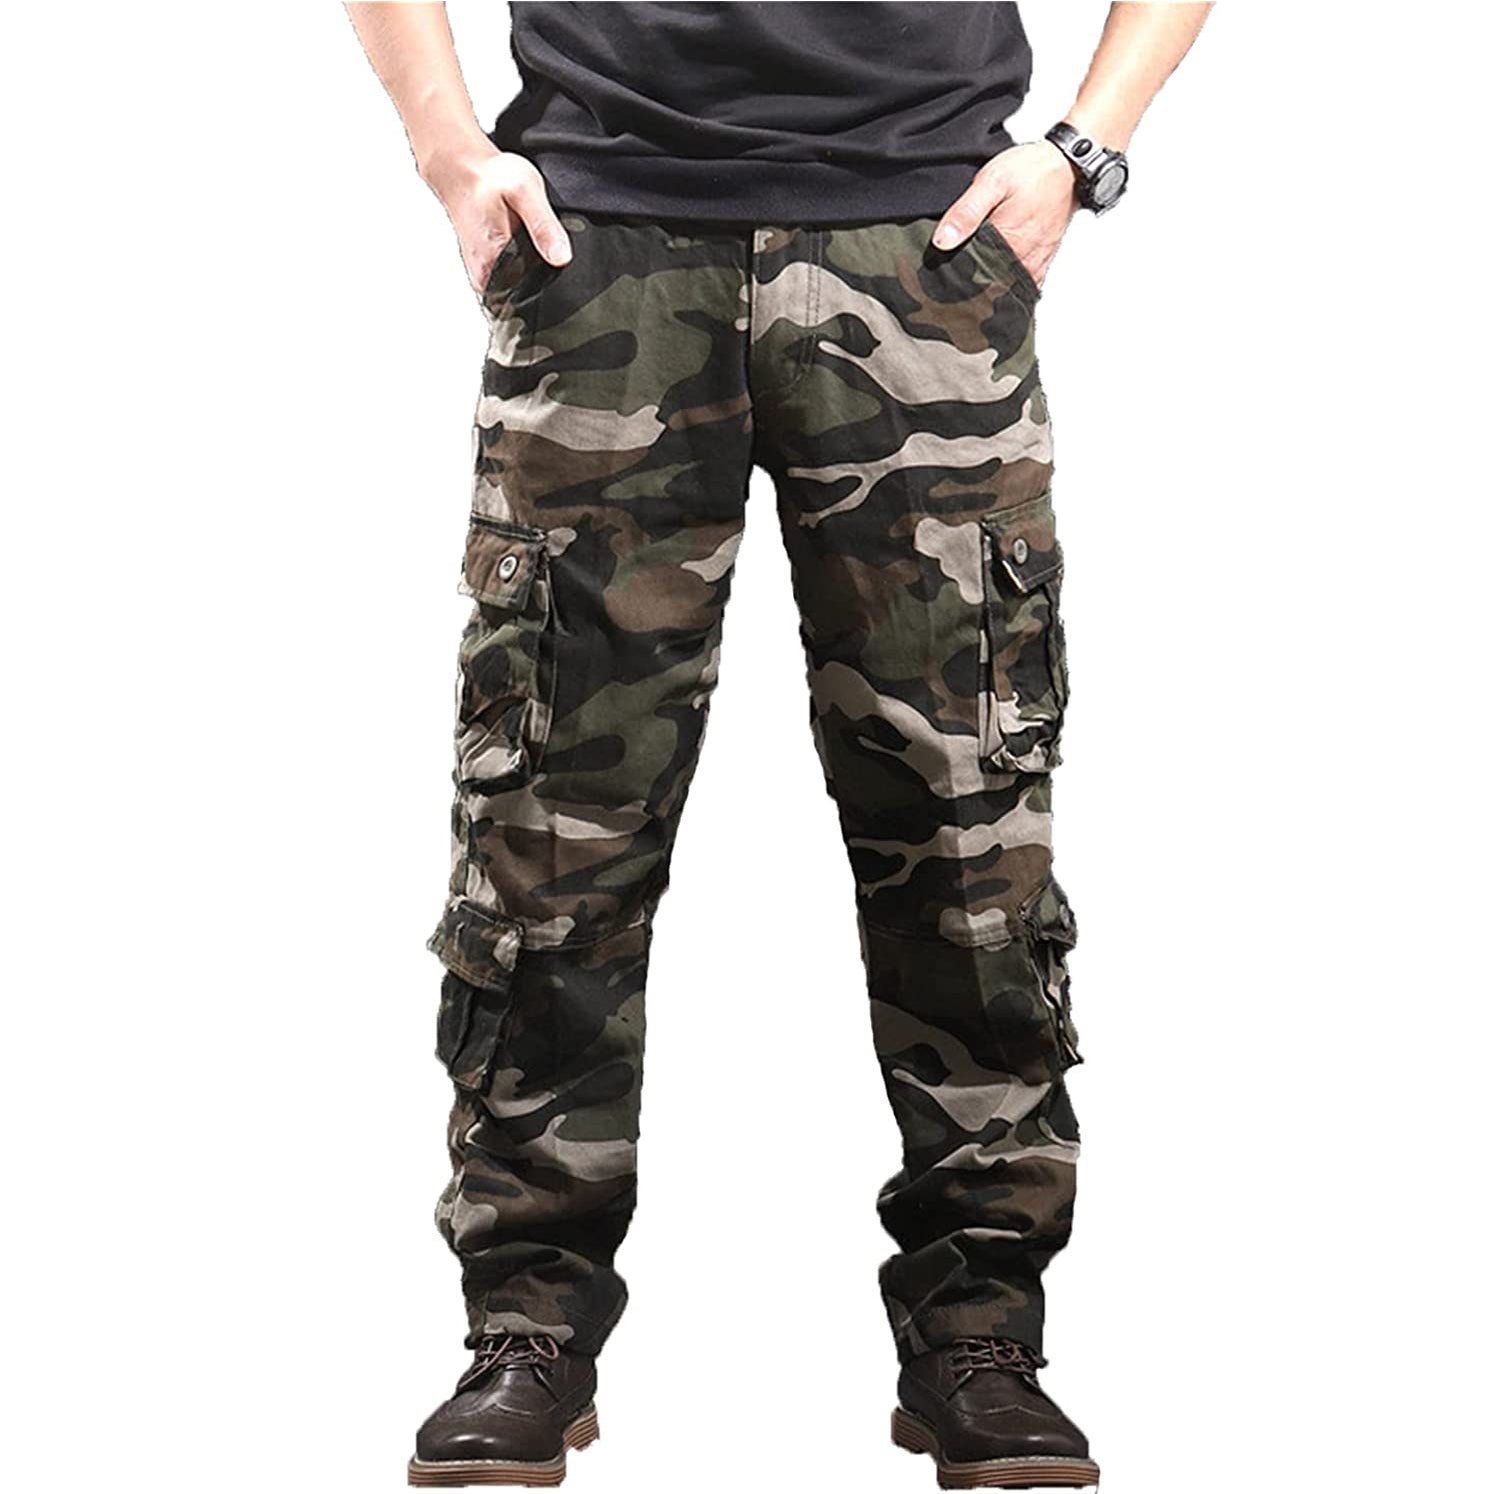 Men's Multi Pocket Military Pants Camo Combat Work Trousers Casual Hiking Pockets Army Slacks